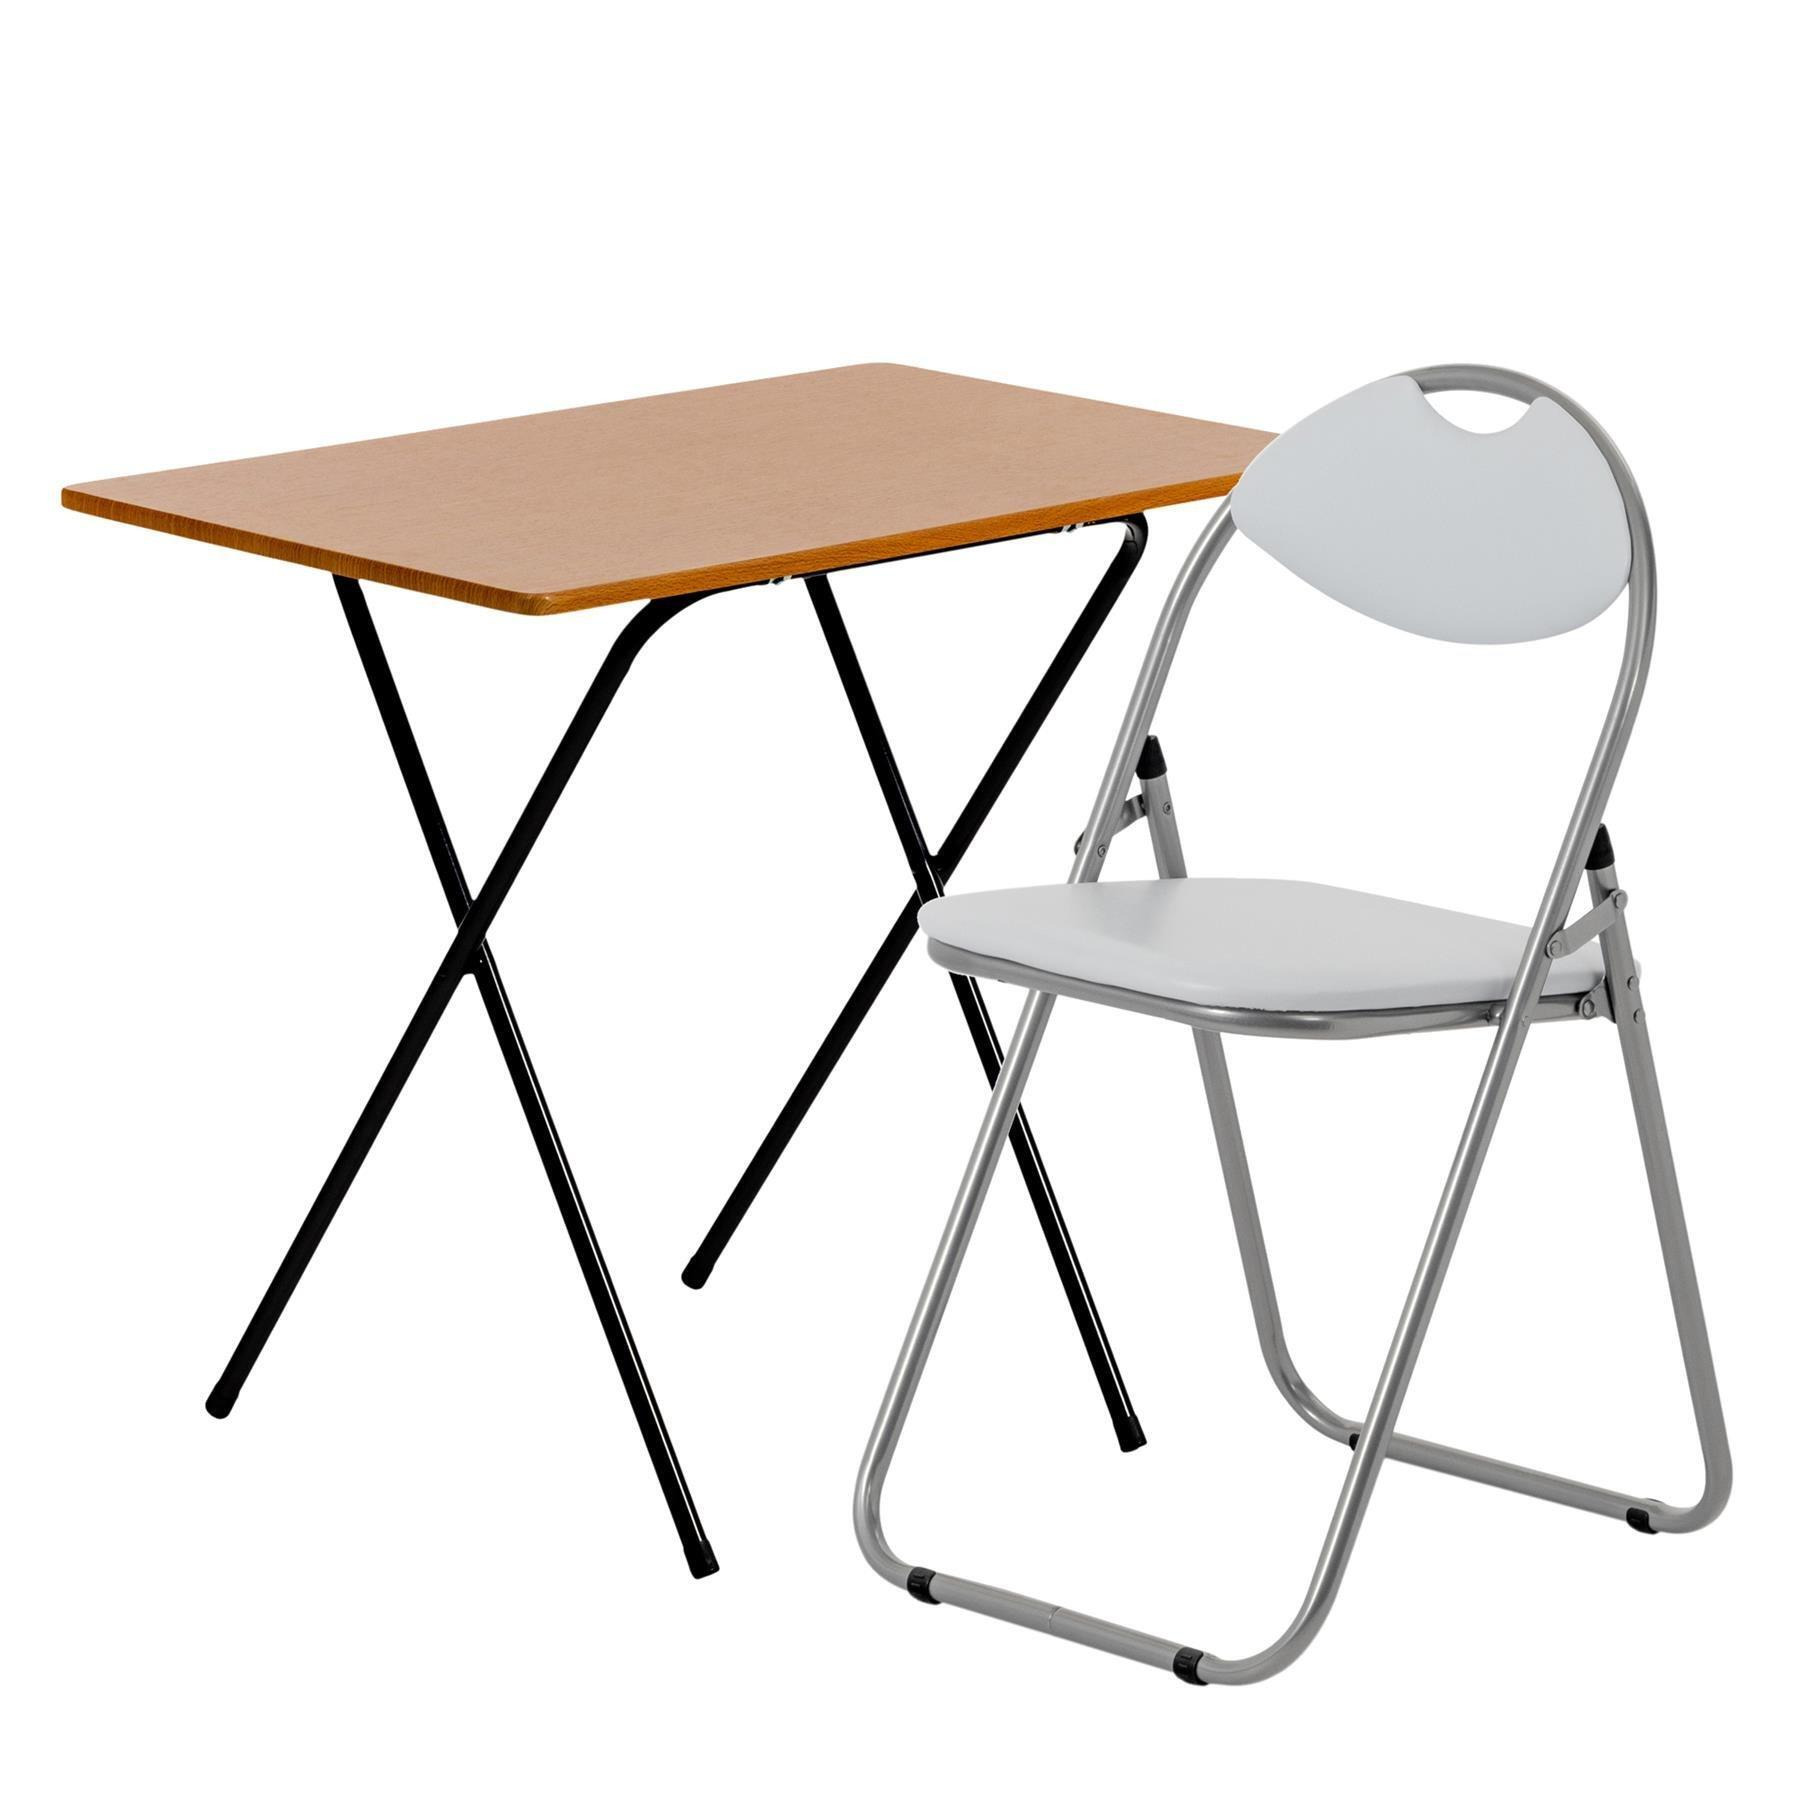 Wooden Folding Desk & Chair Set Natural/White - image 1